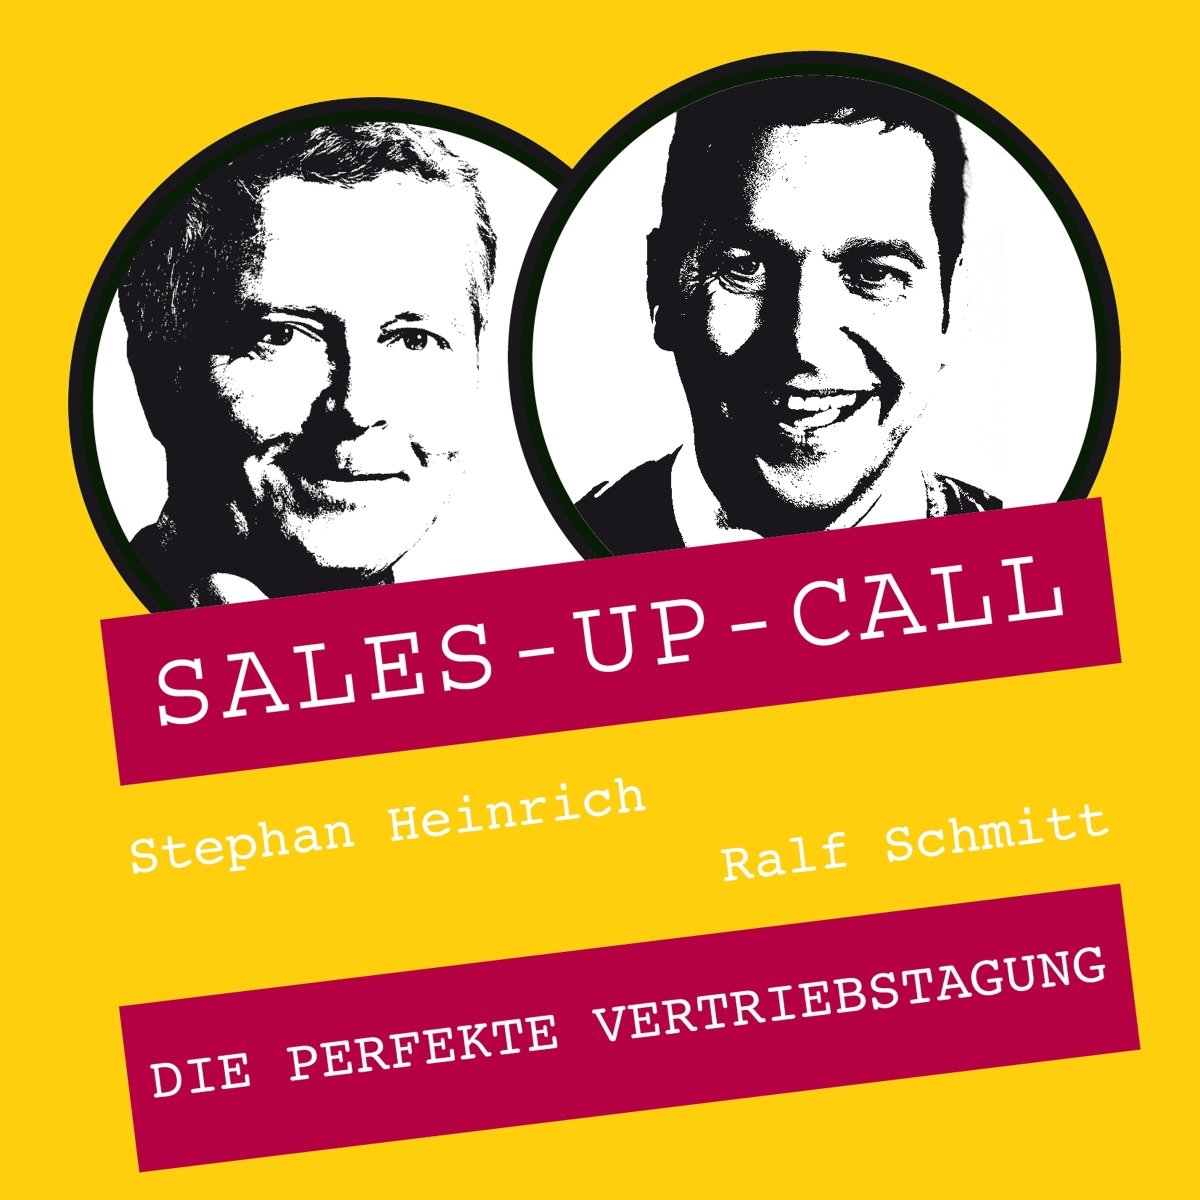 Die perfekte Vertriebstagung - Sales-up-Call - Stephan Heinrich